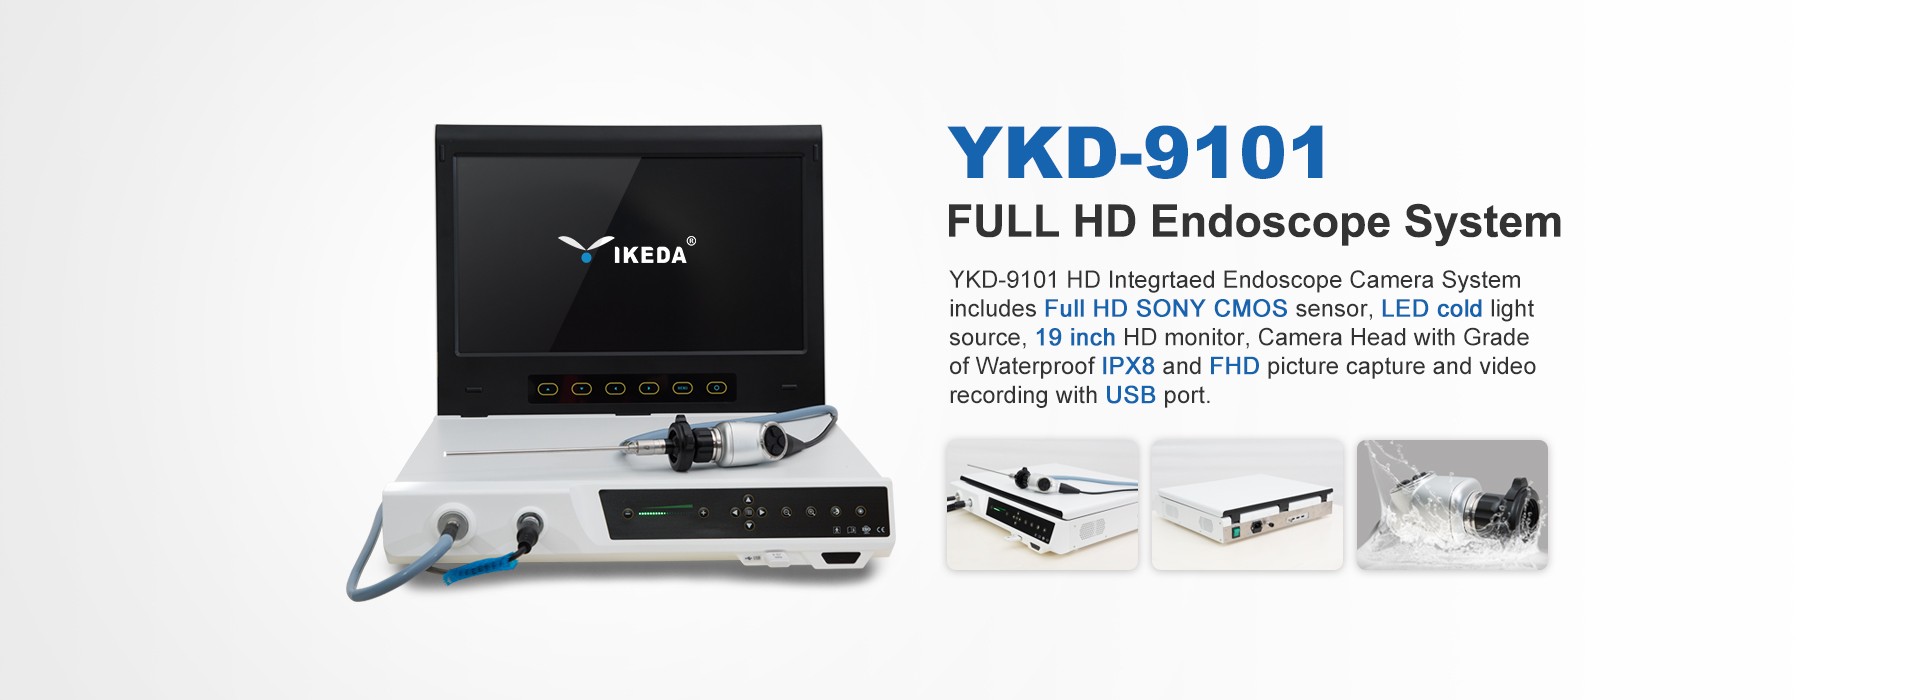 https://www.xzykd.com/endoscope-camera/ykd-9101.html